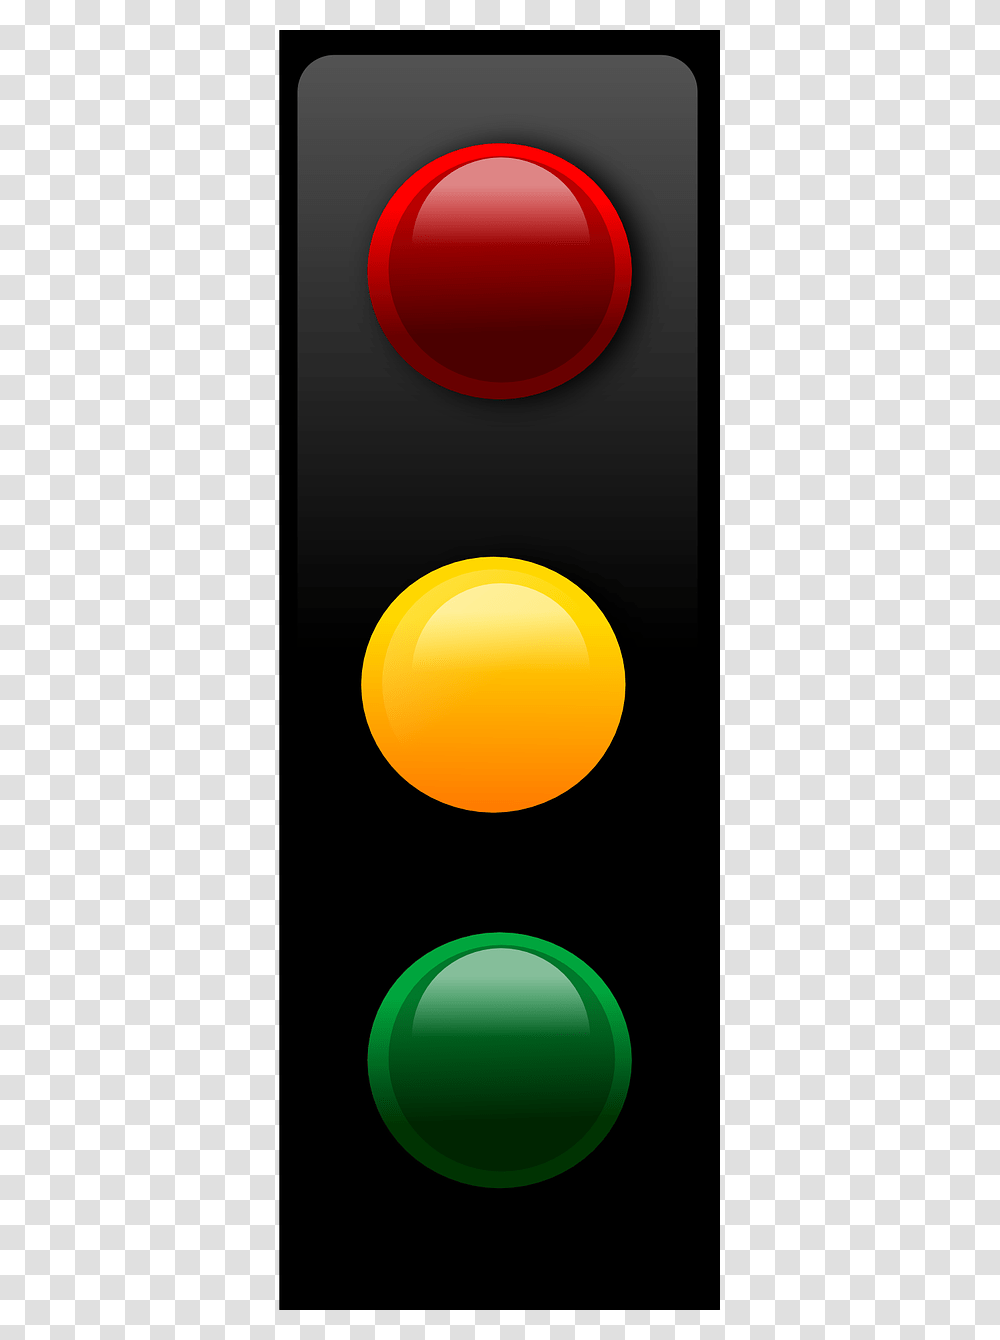 Traffic Light Images Free Download Transparent Png